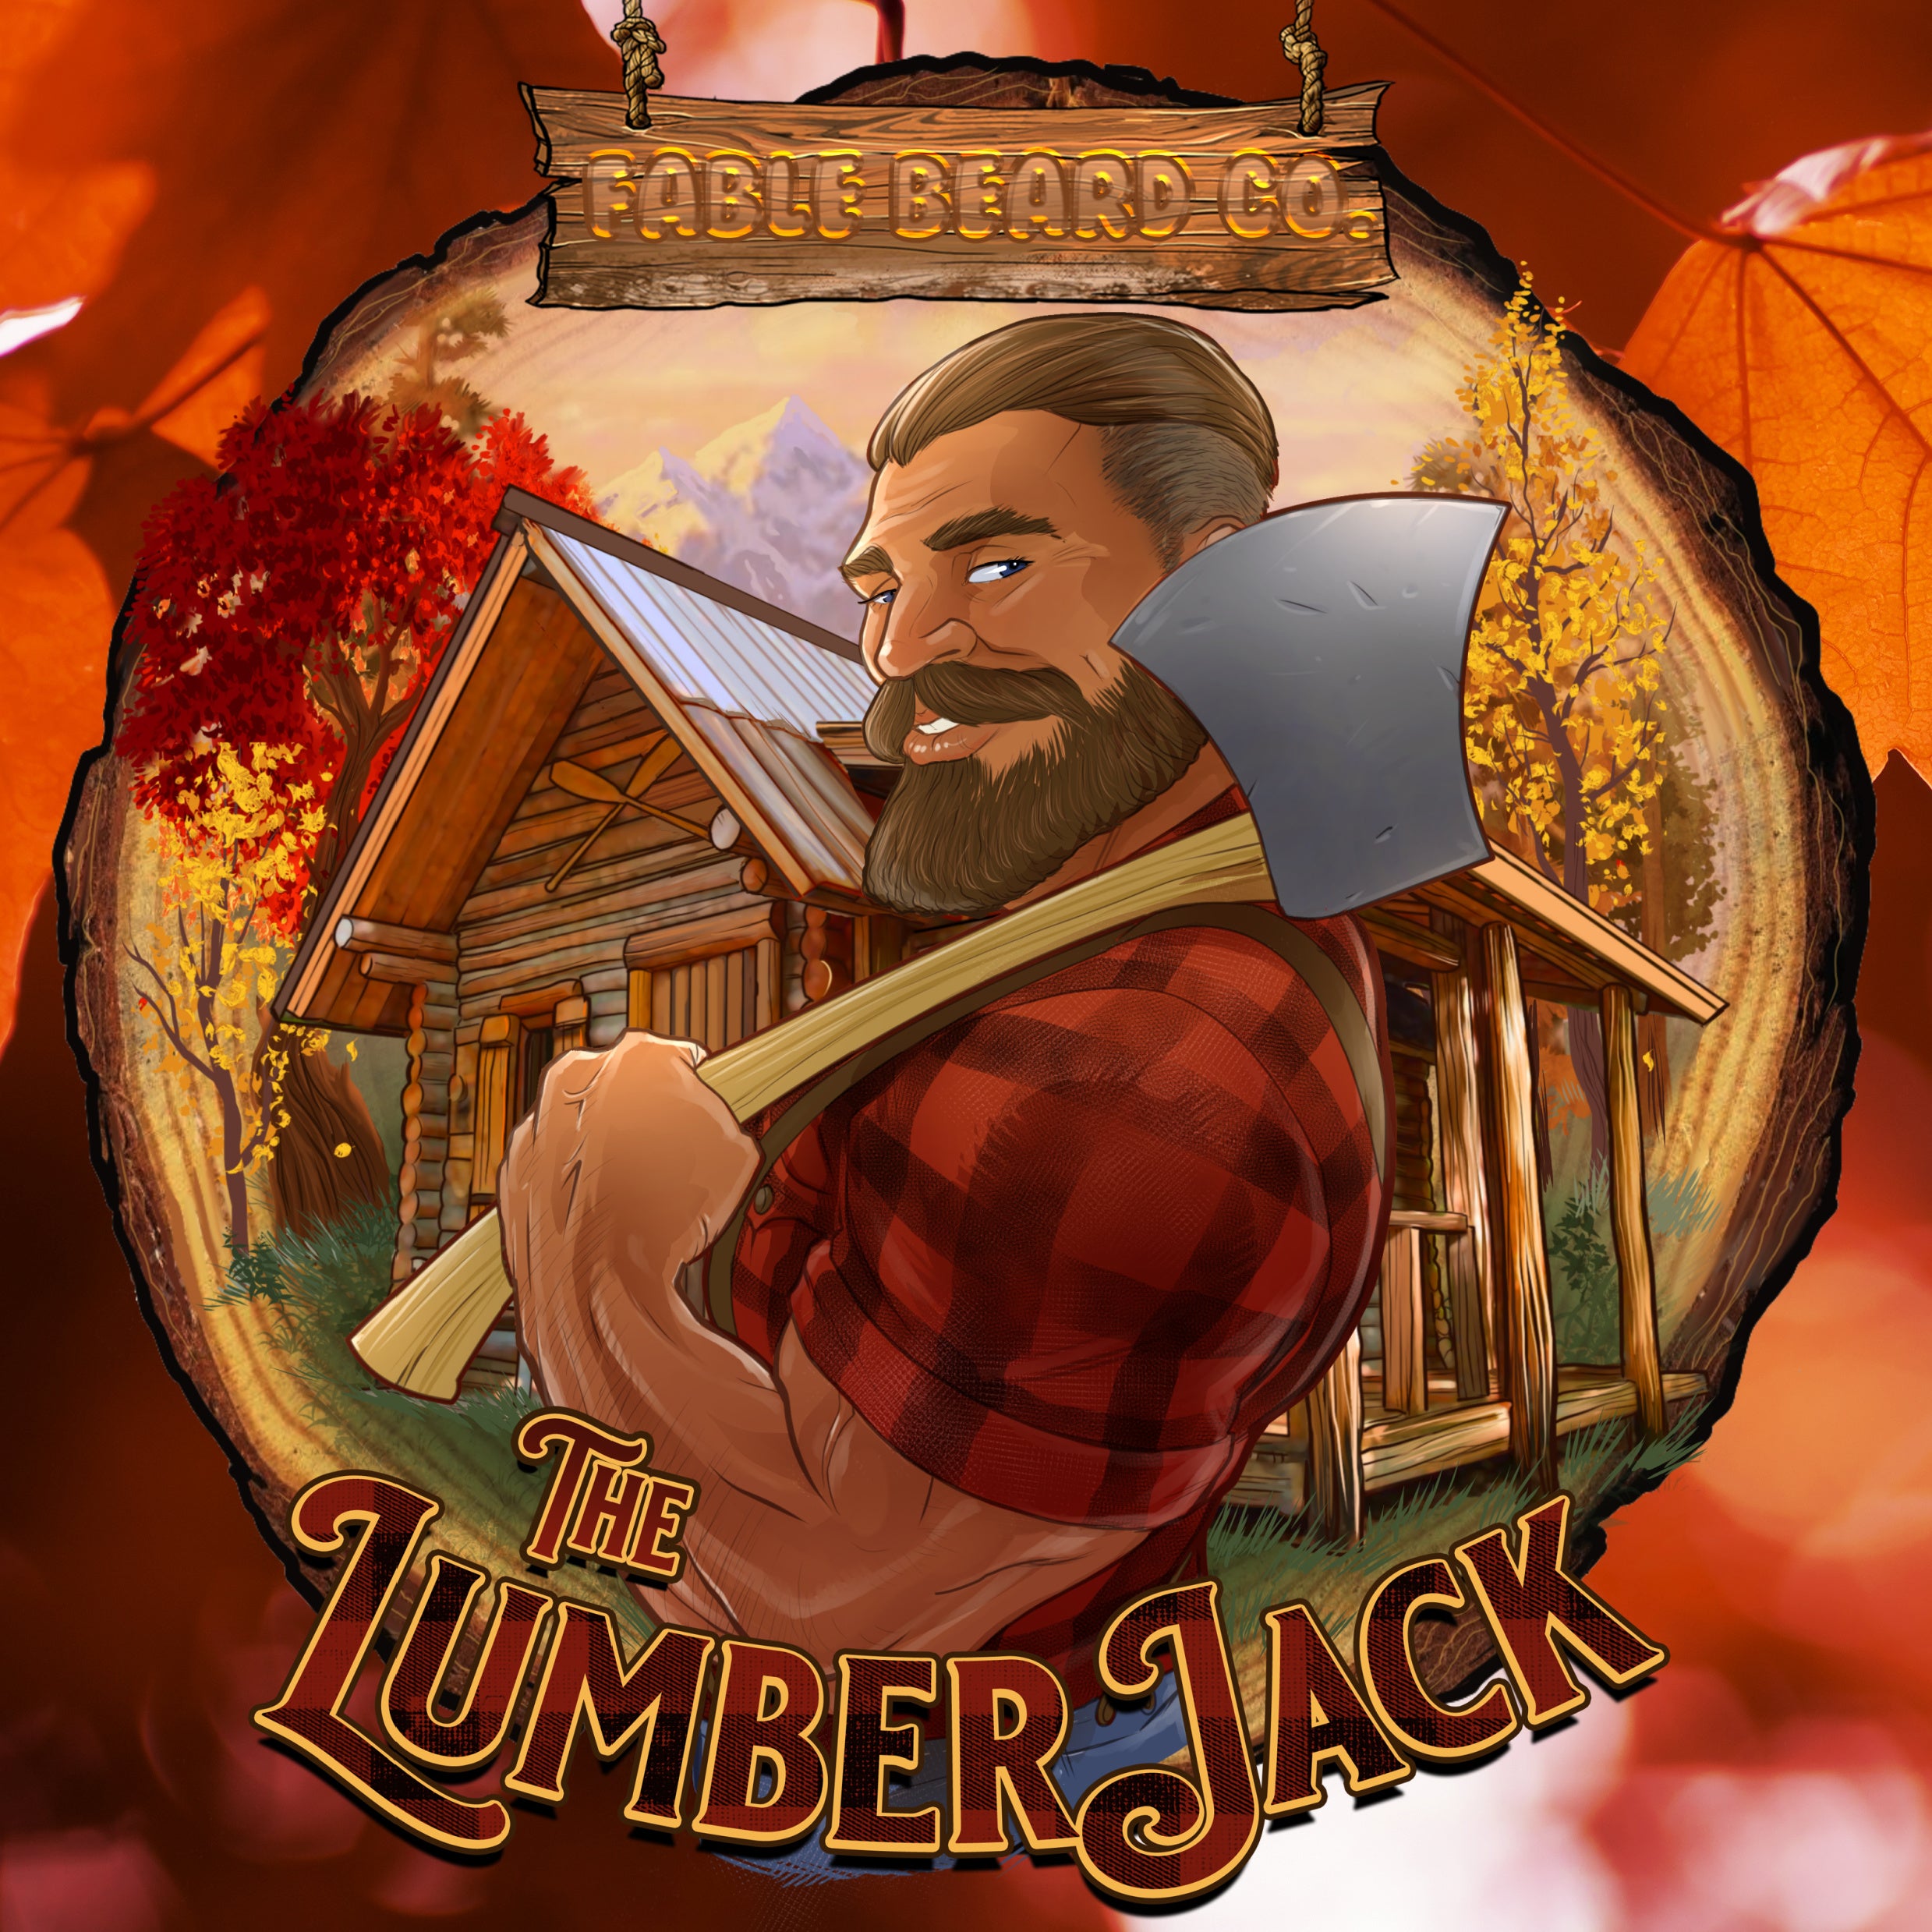 Lumberjack Beard Co.